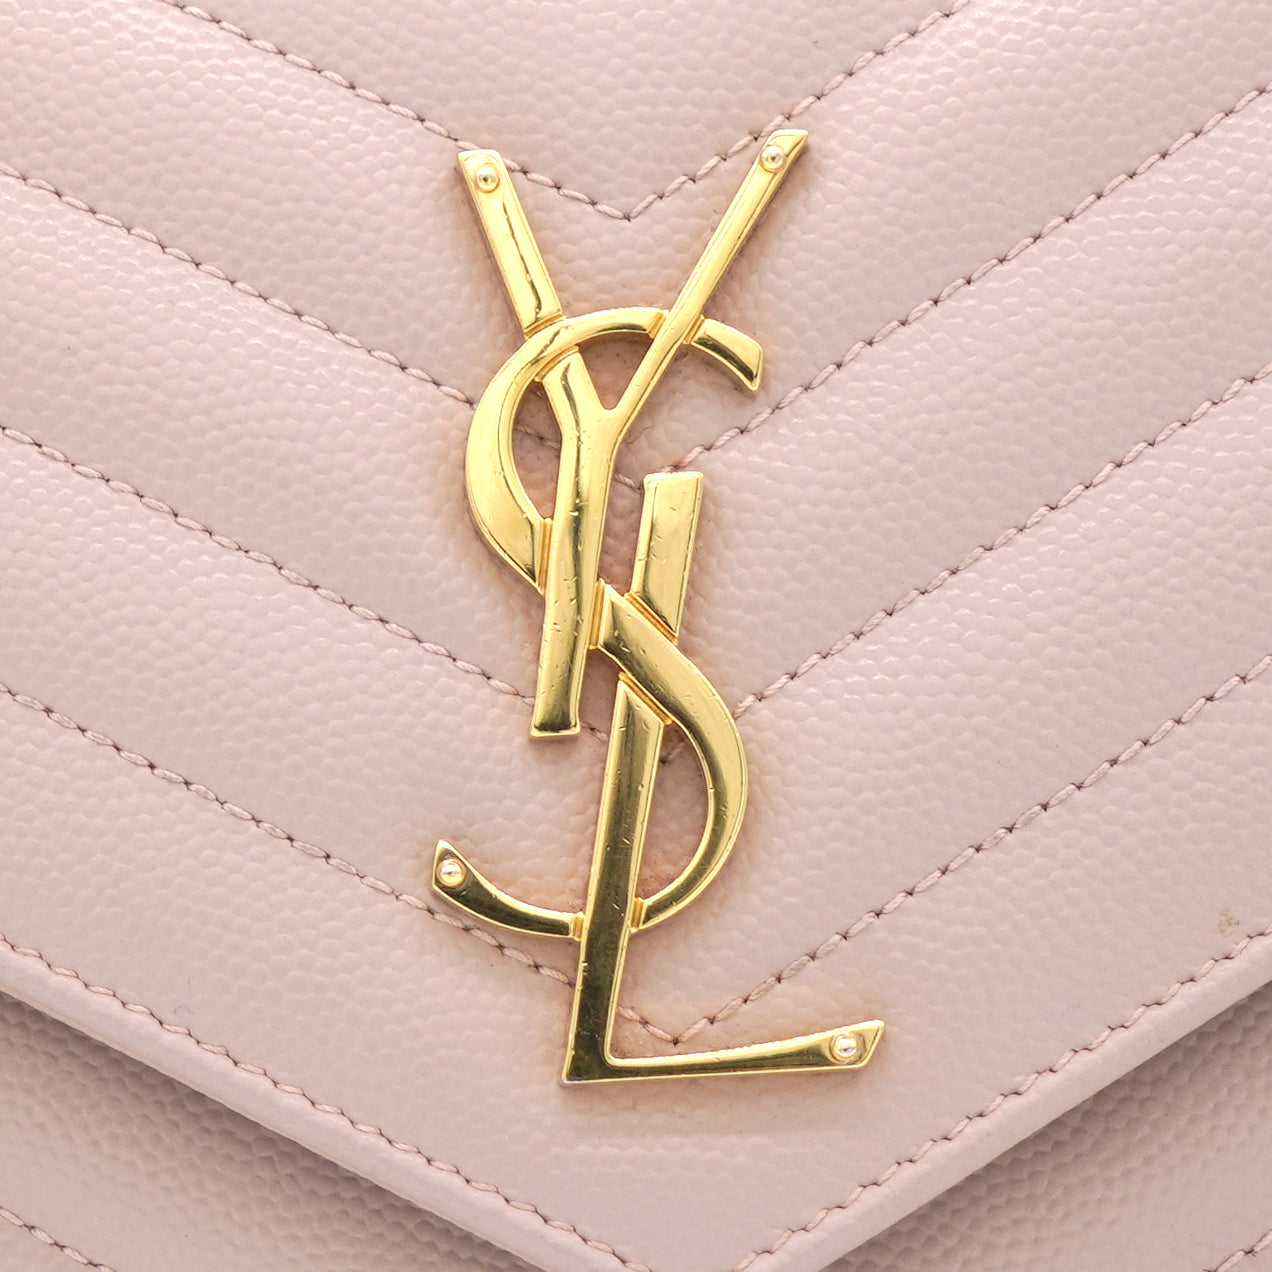 Pink Matelasse Leather Monogram Envelope Wallet on Chain